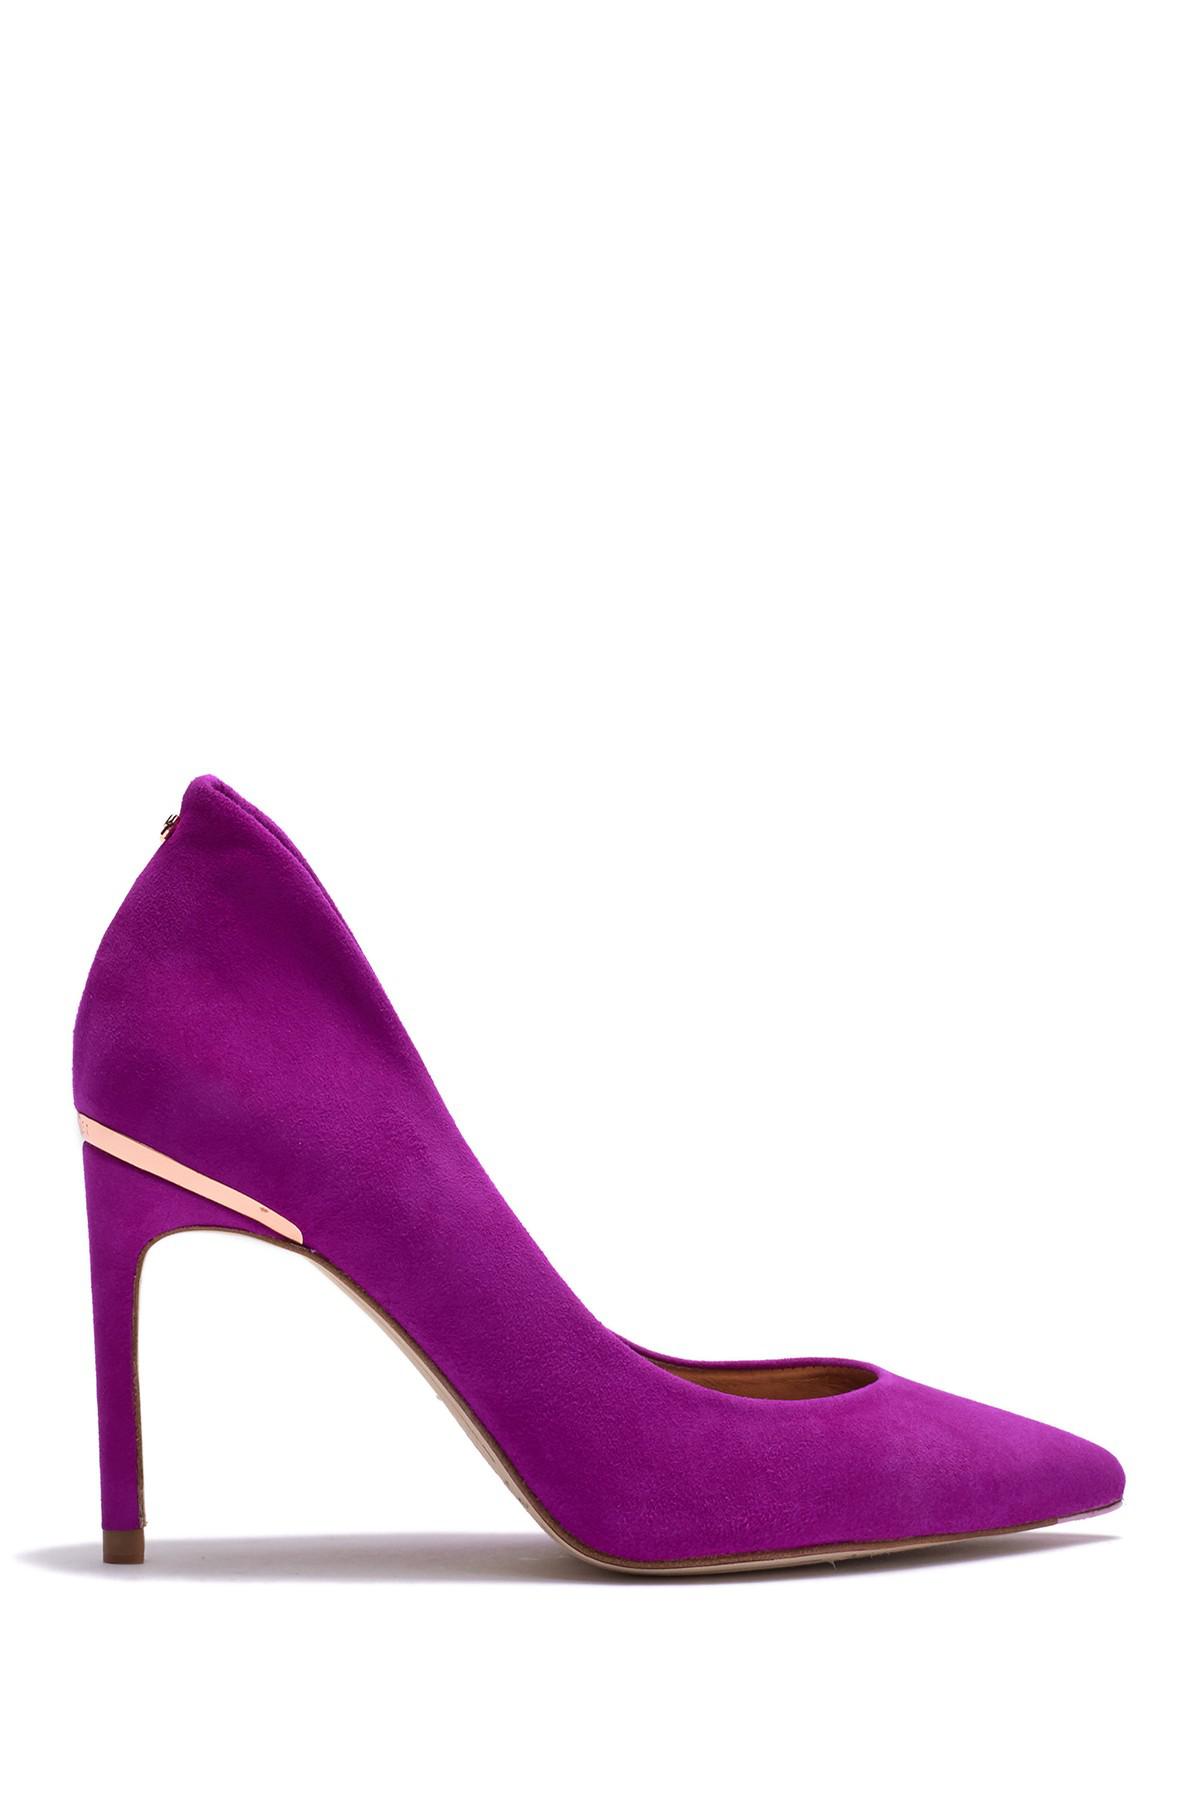 Ted Baker Savio 2 Stiletto Heeled Court Shoes in Purple | Lyst